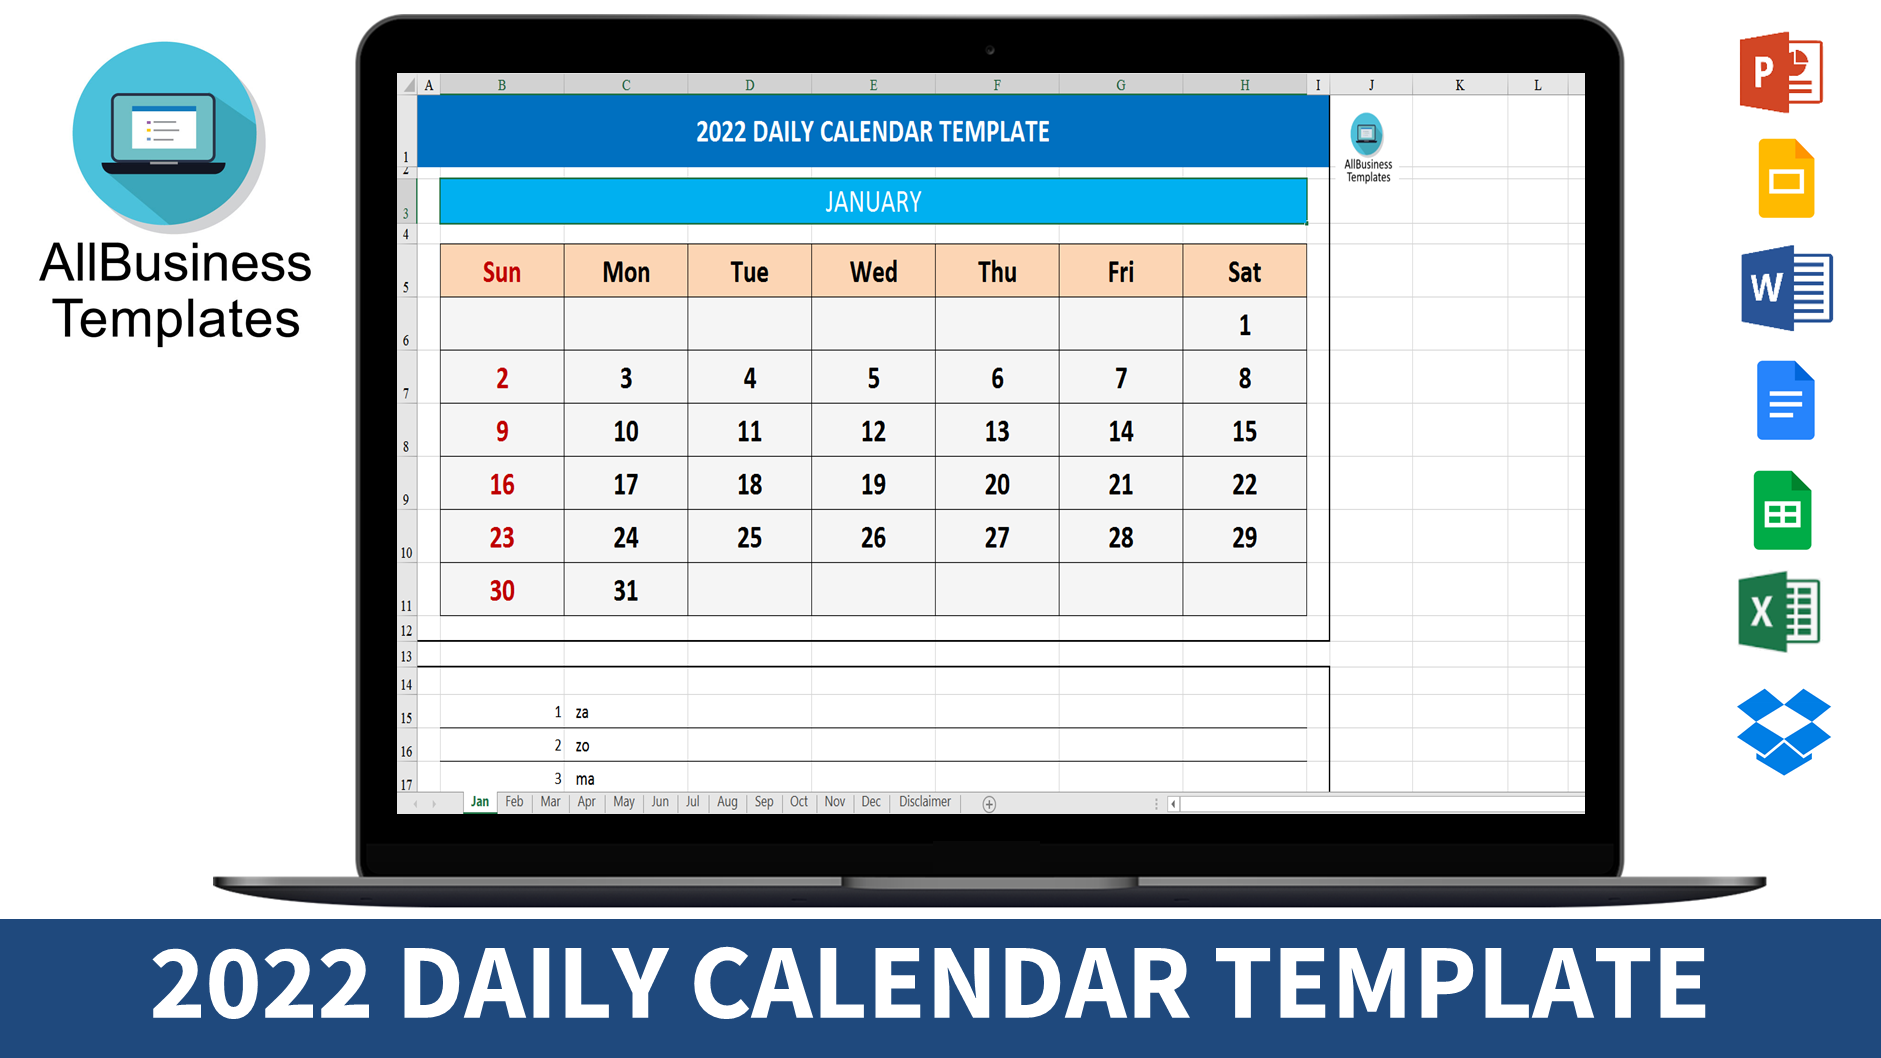 2022 Daily Calendar Template main image